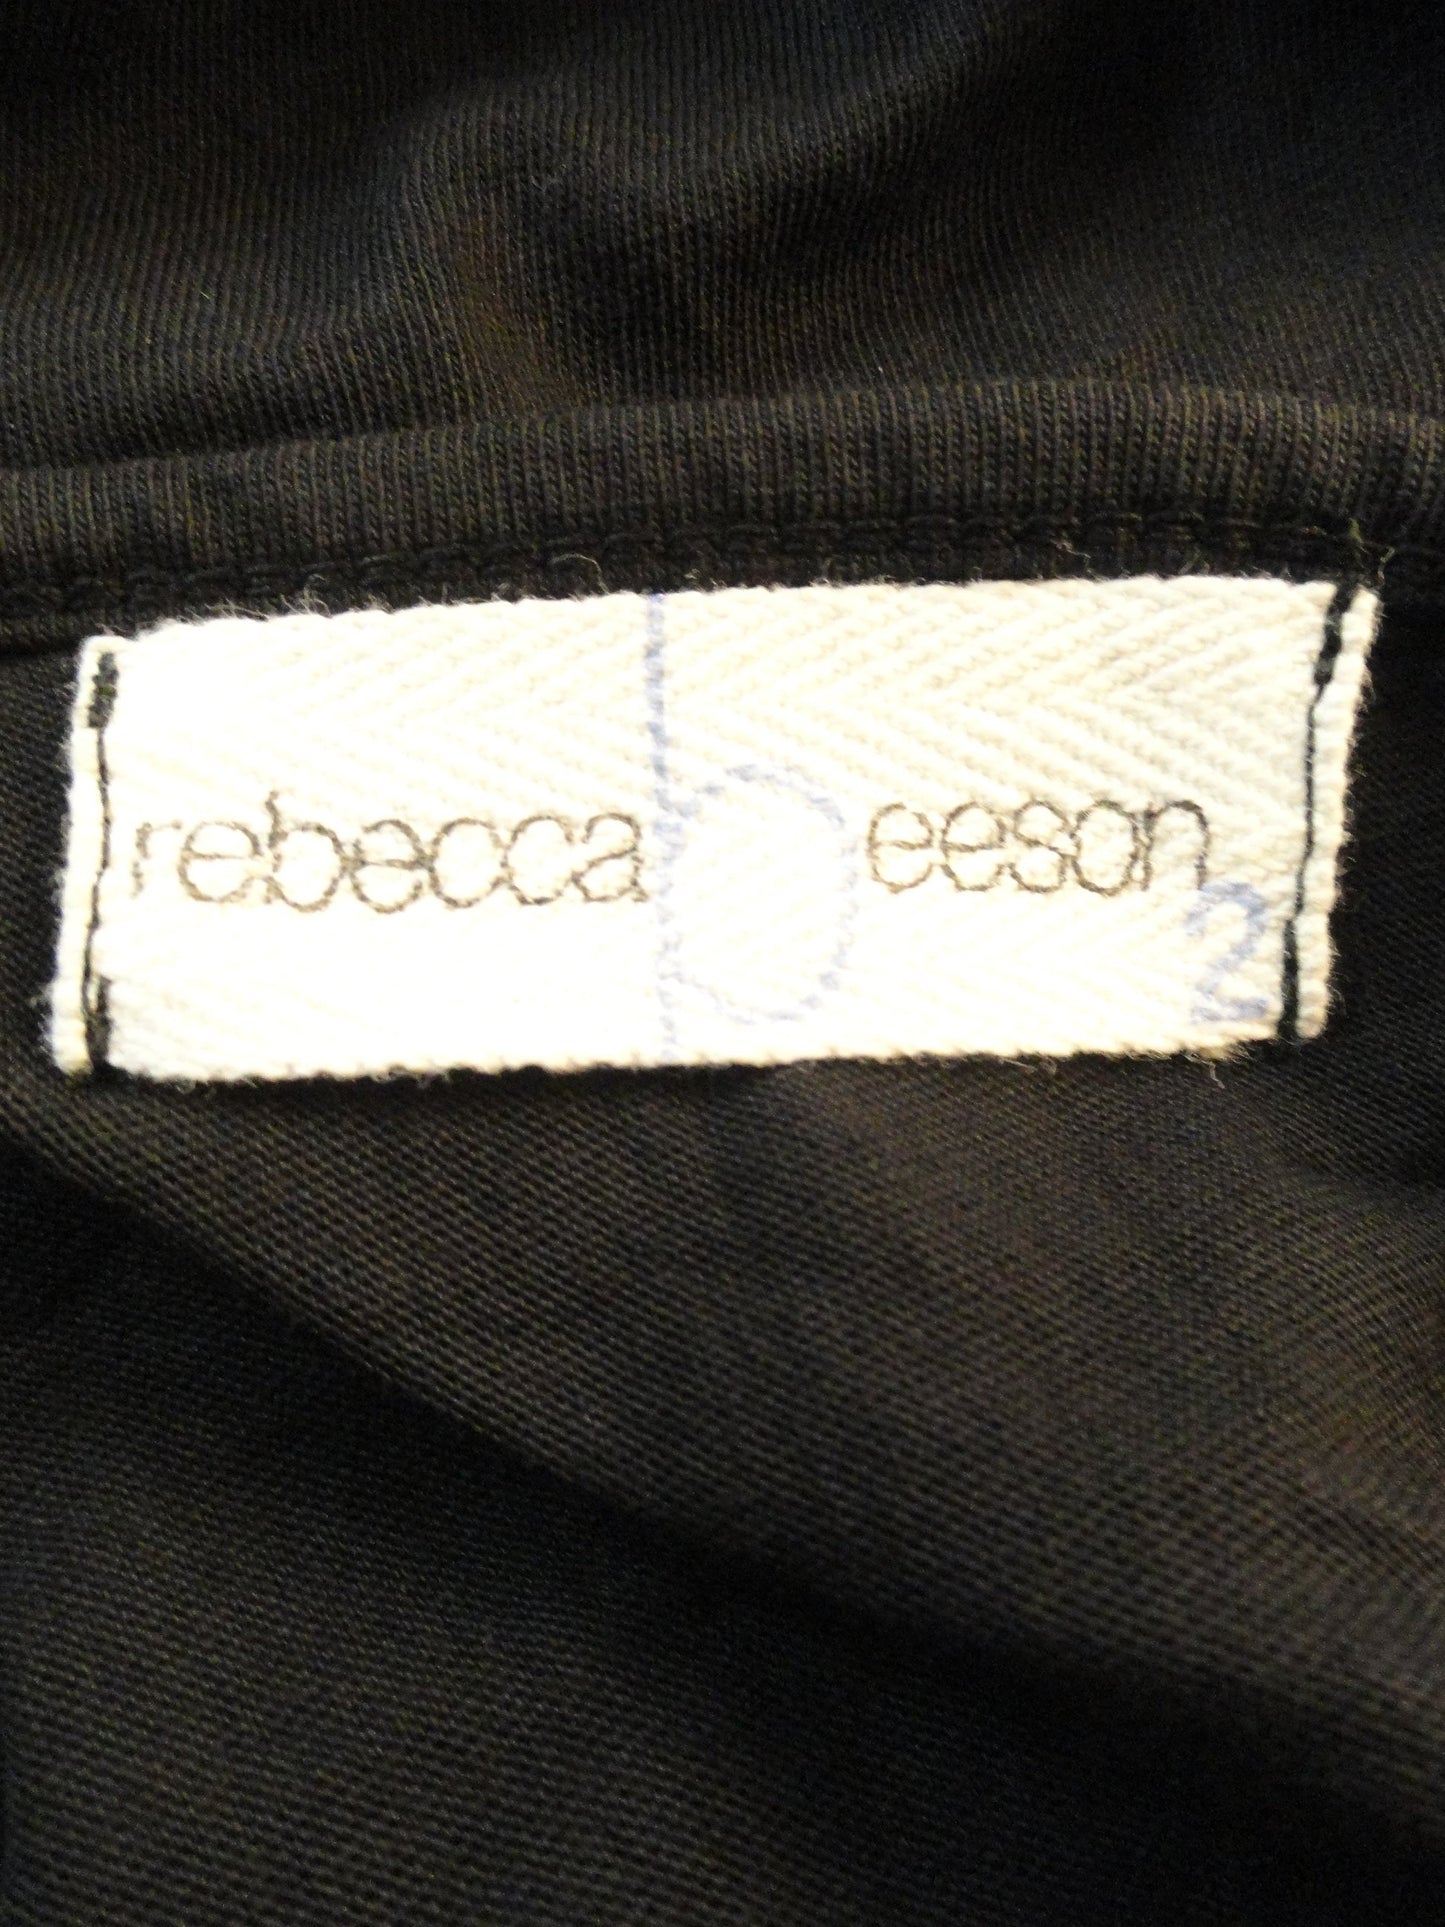 Rebecca Besson 90's Top V-Neck Black Size 2 SKU 000095